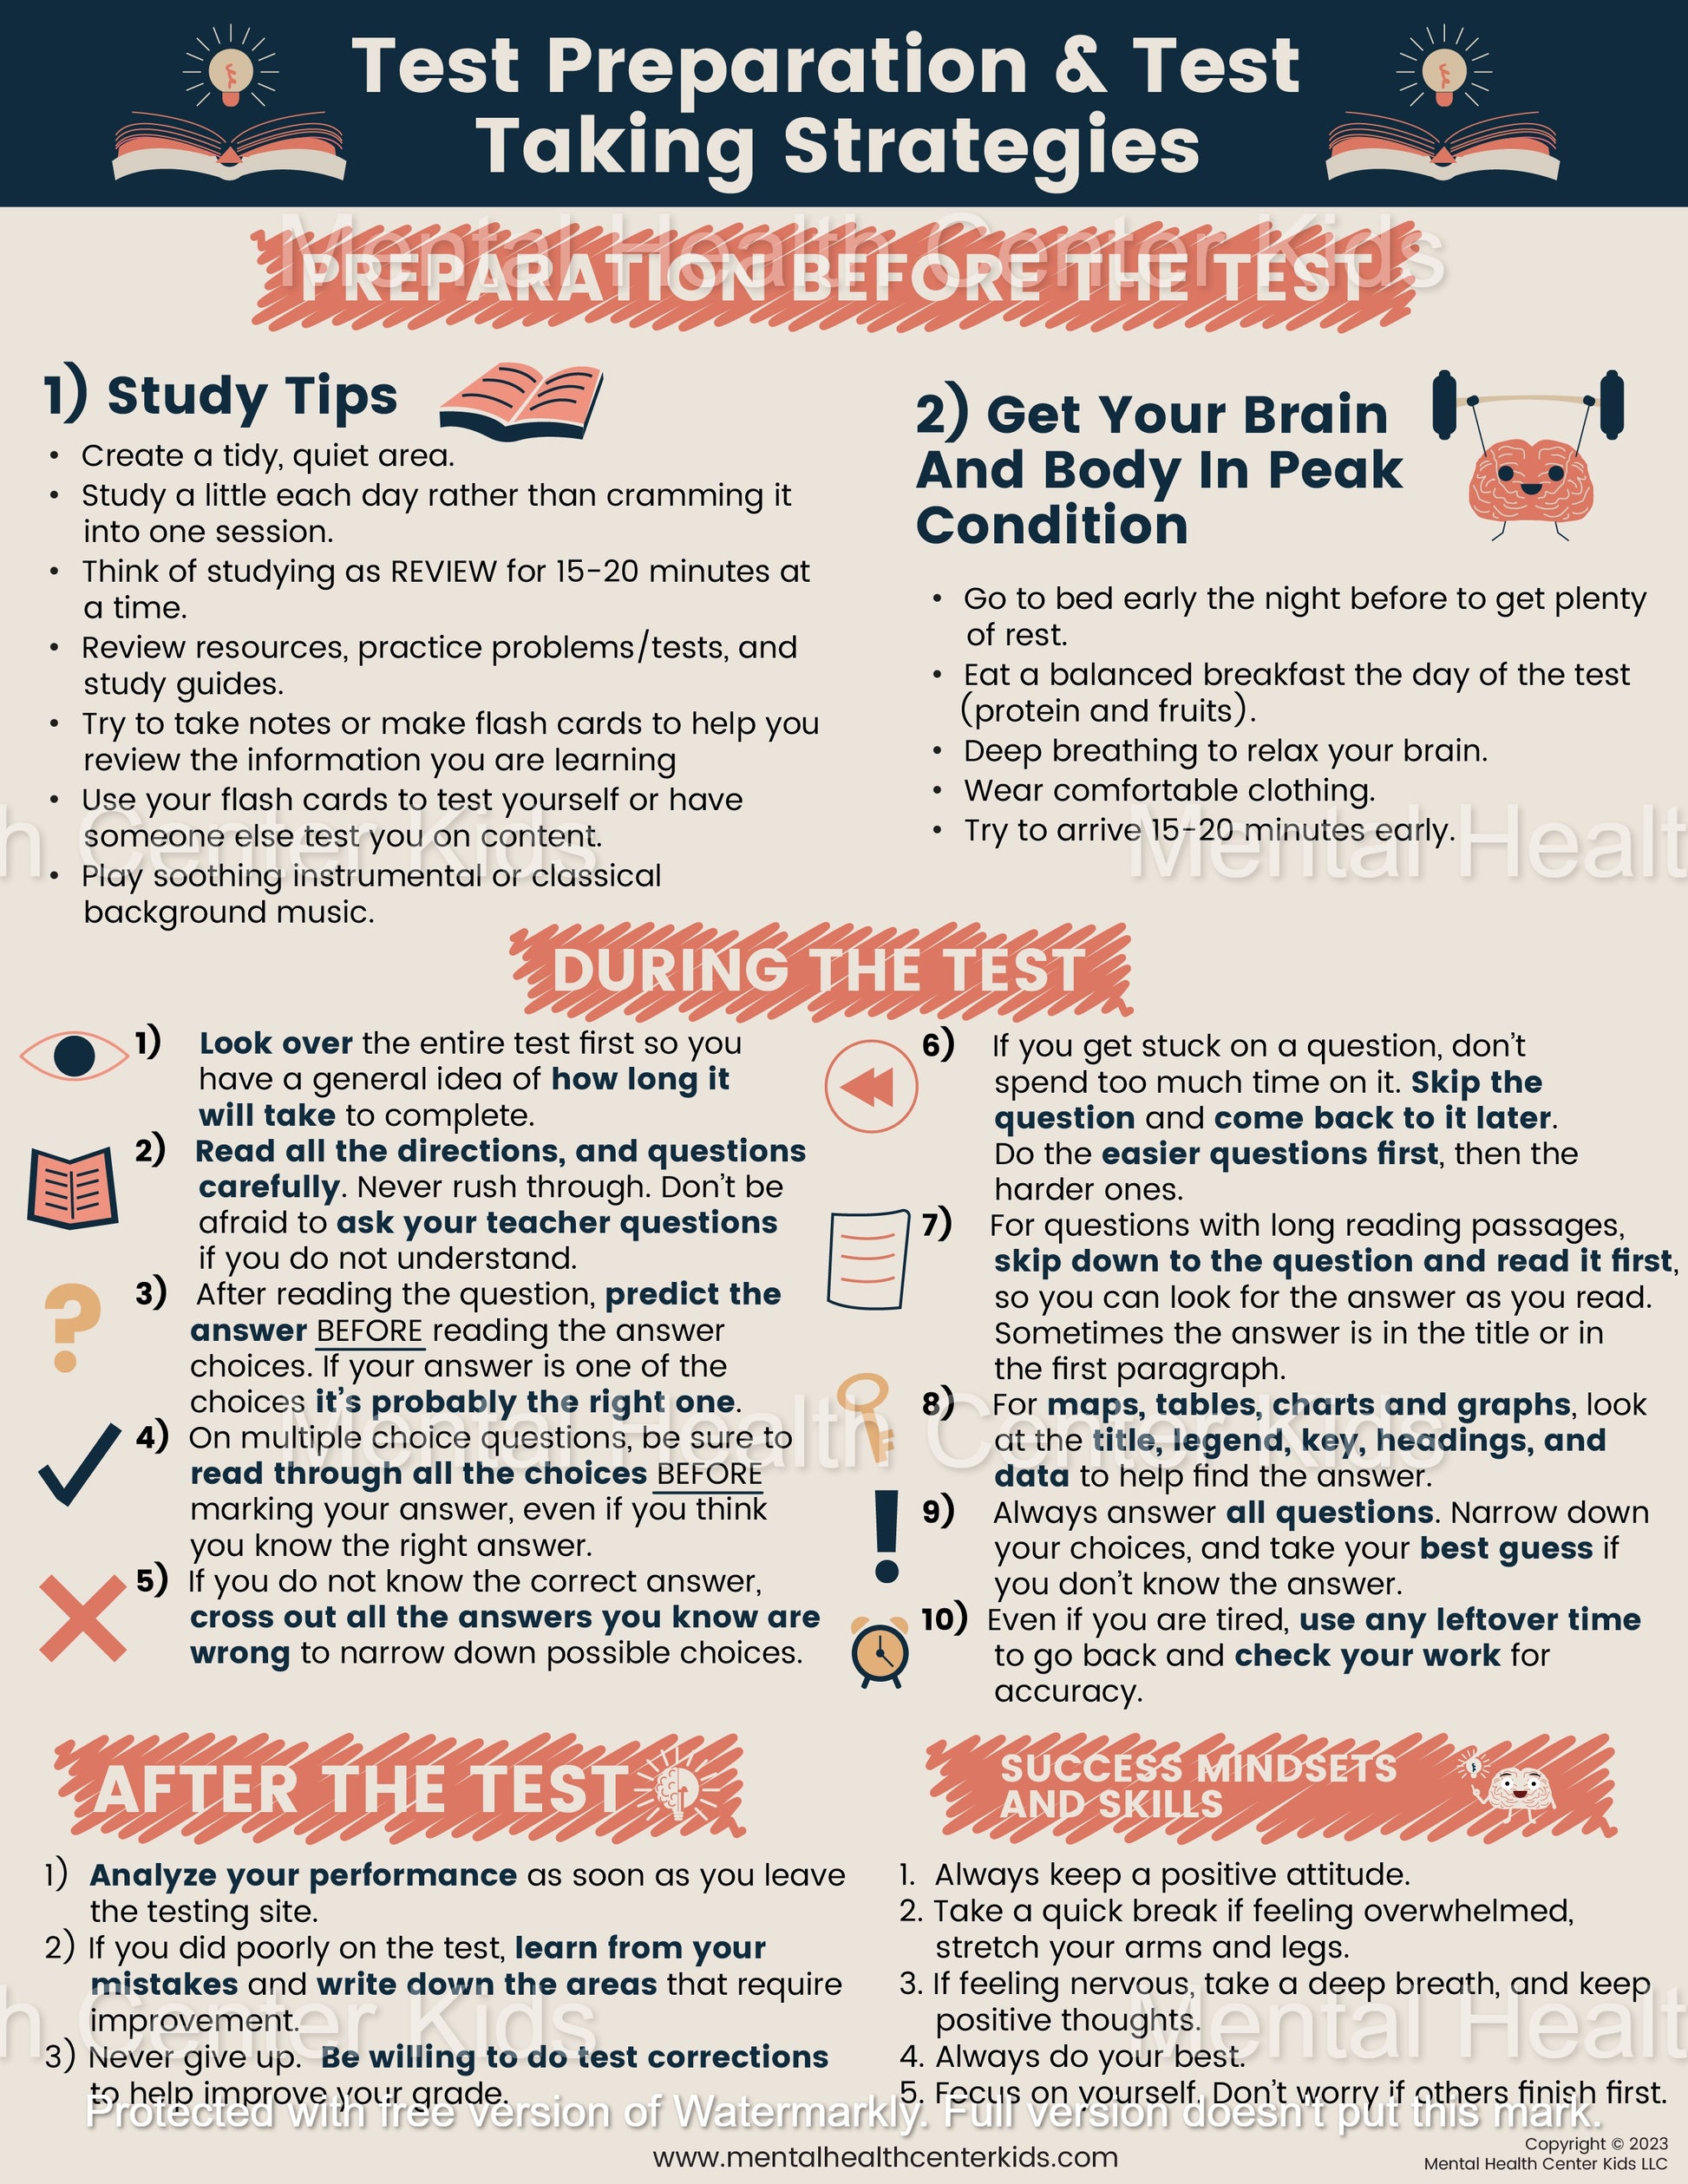 Study Skills: Open Book Test Preparation Tips